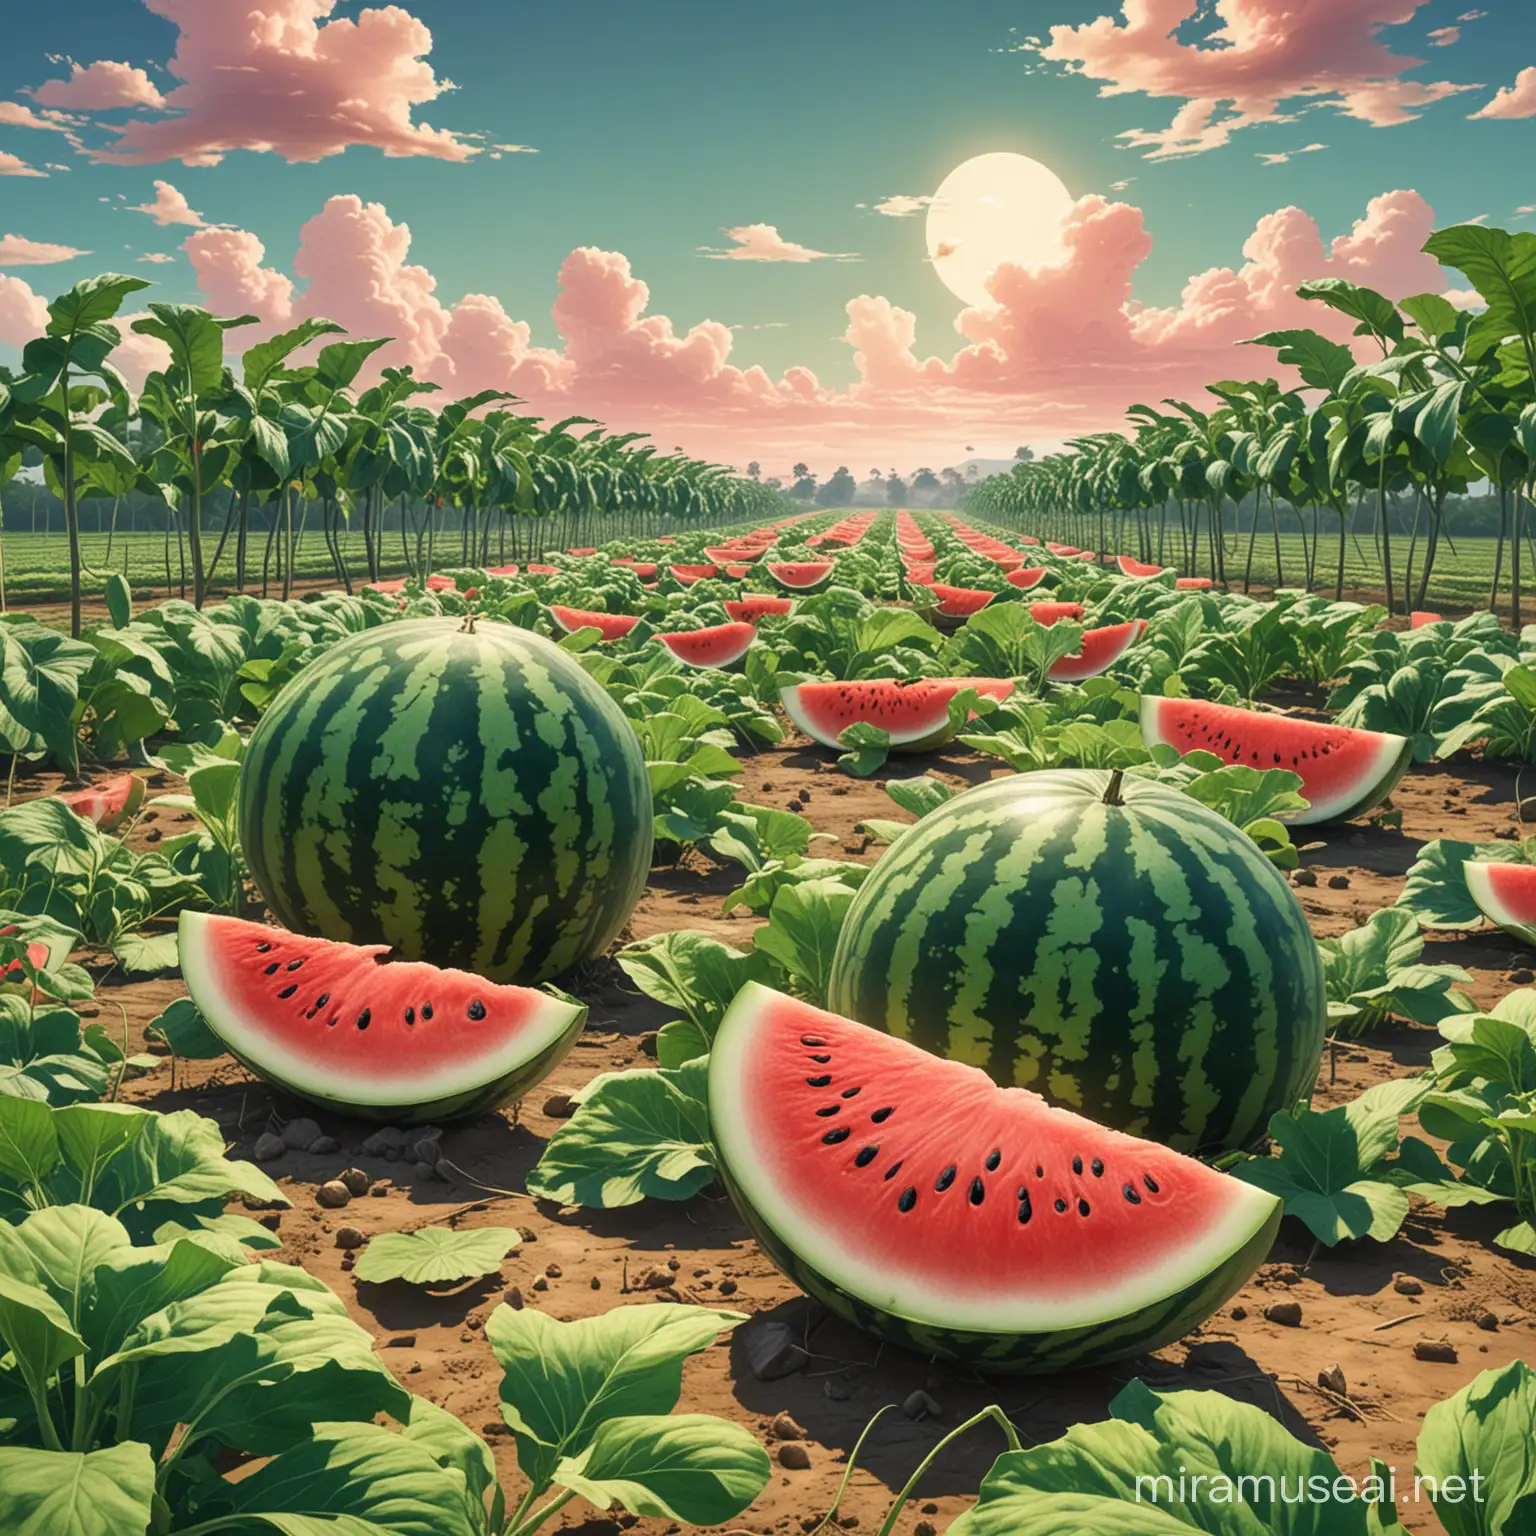 watermelon farm in anime style